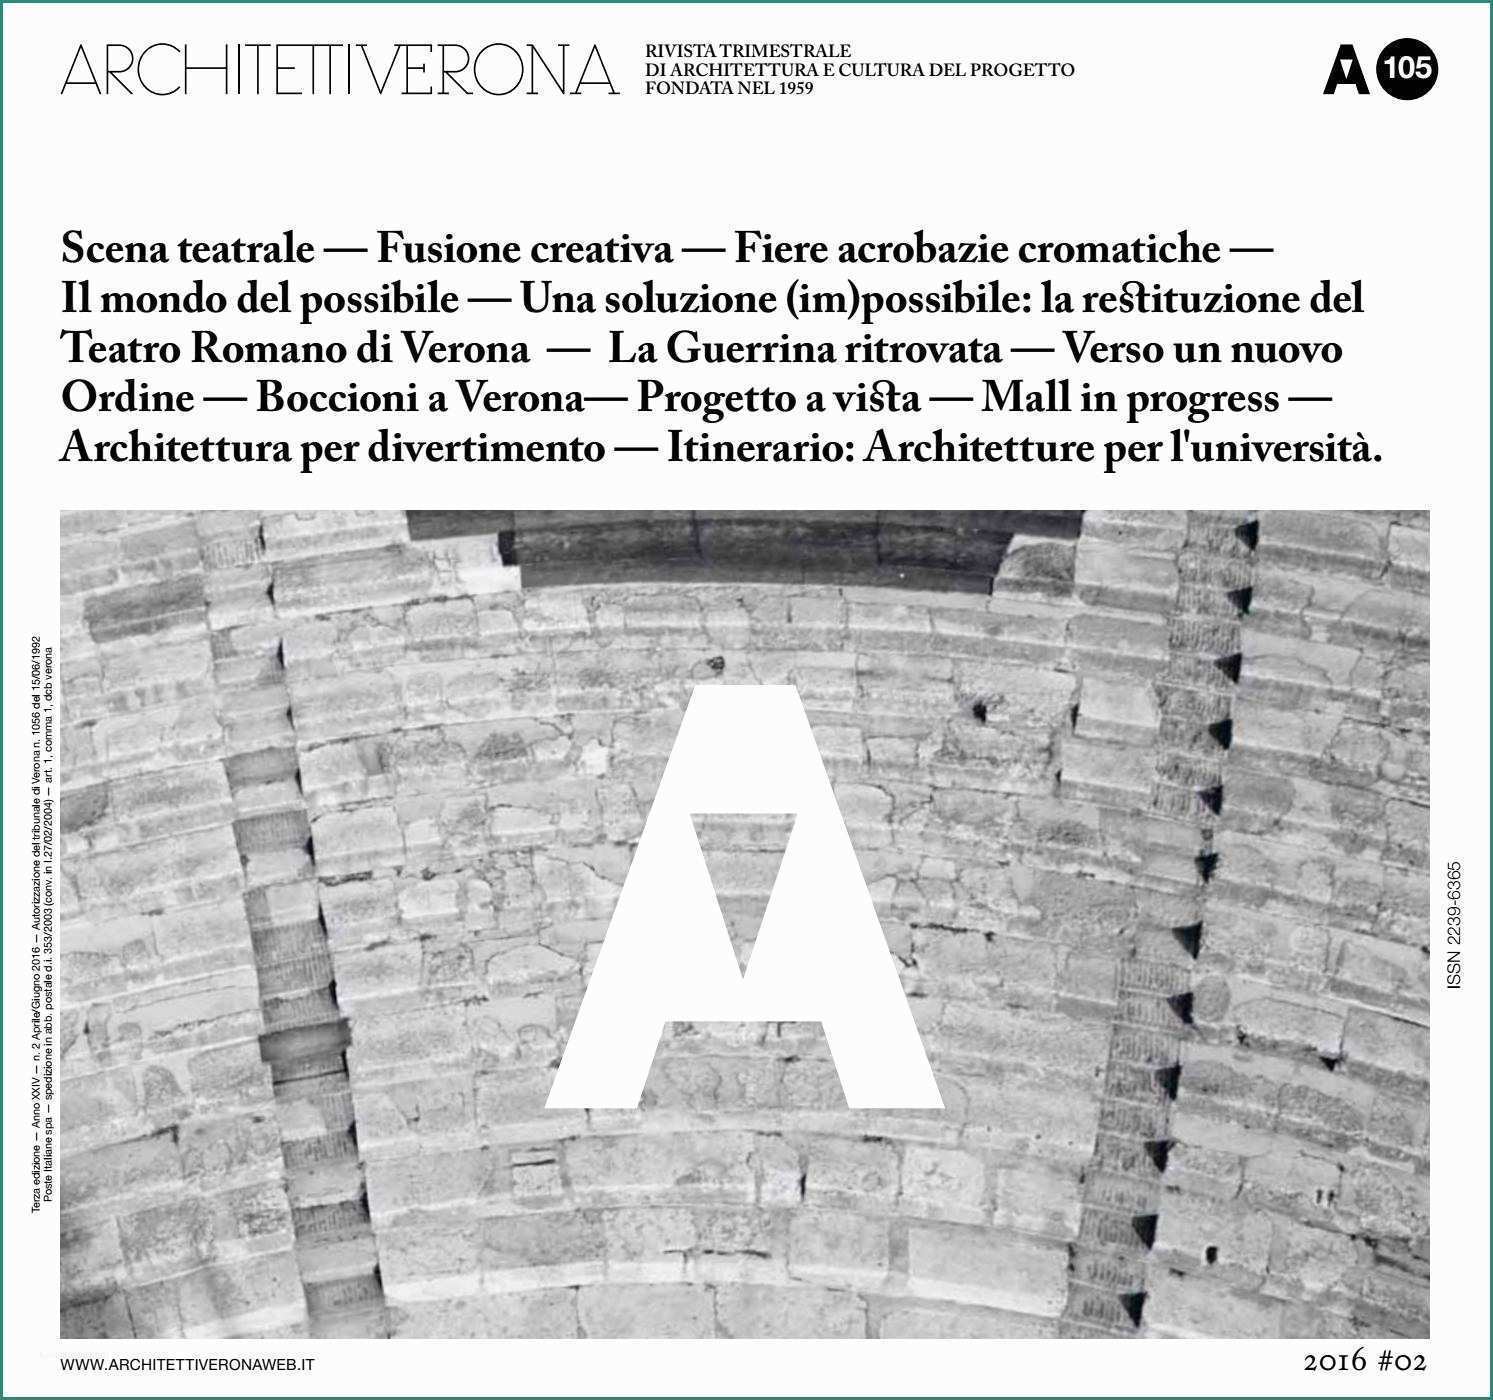 Finestre Scorrevoli Dwg E Architettiverona 105 by Architettiverona issuu